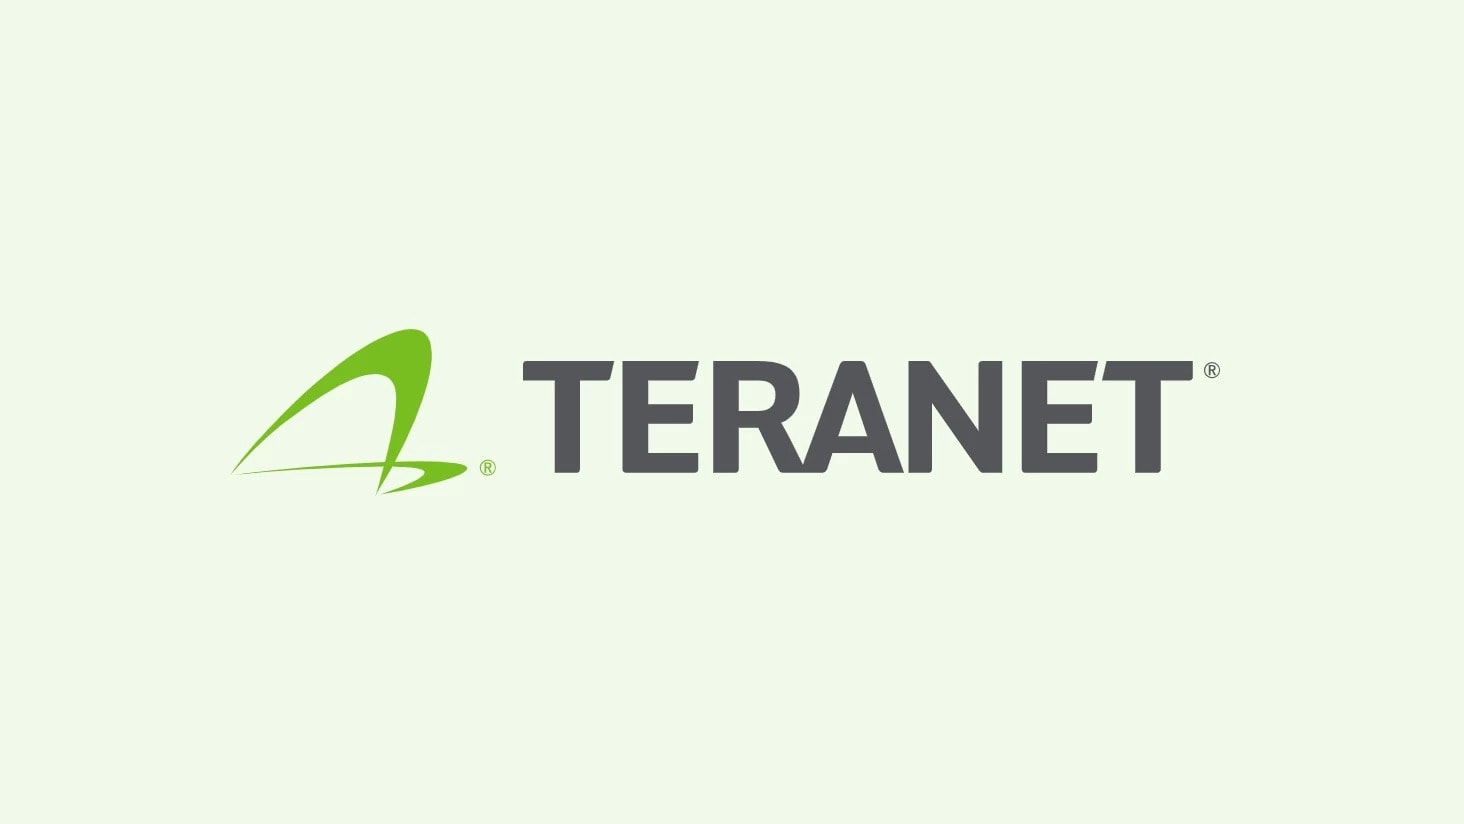 Teranet Transforms Thanks to Ataccama Partnership